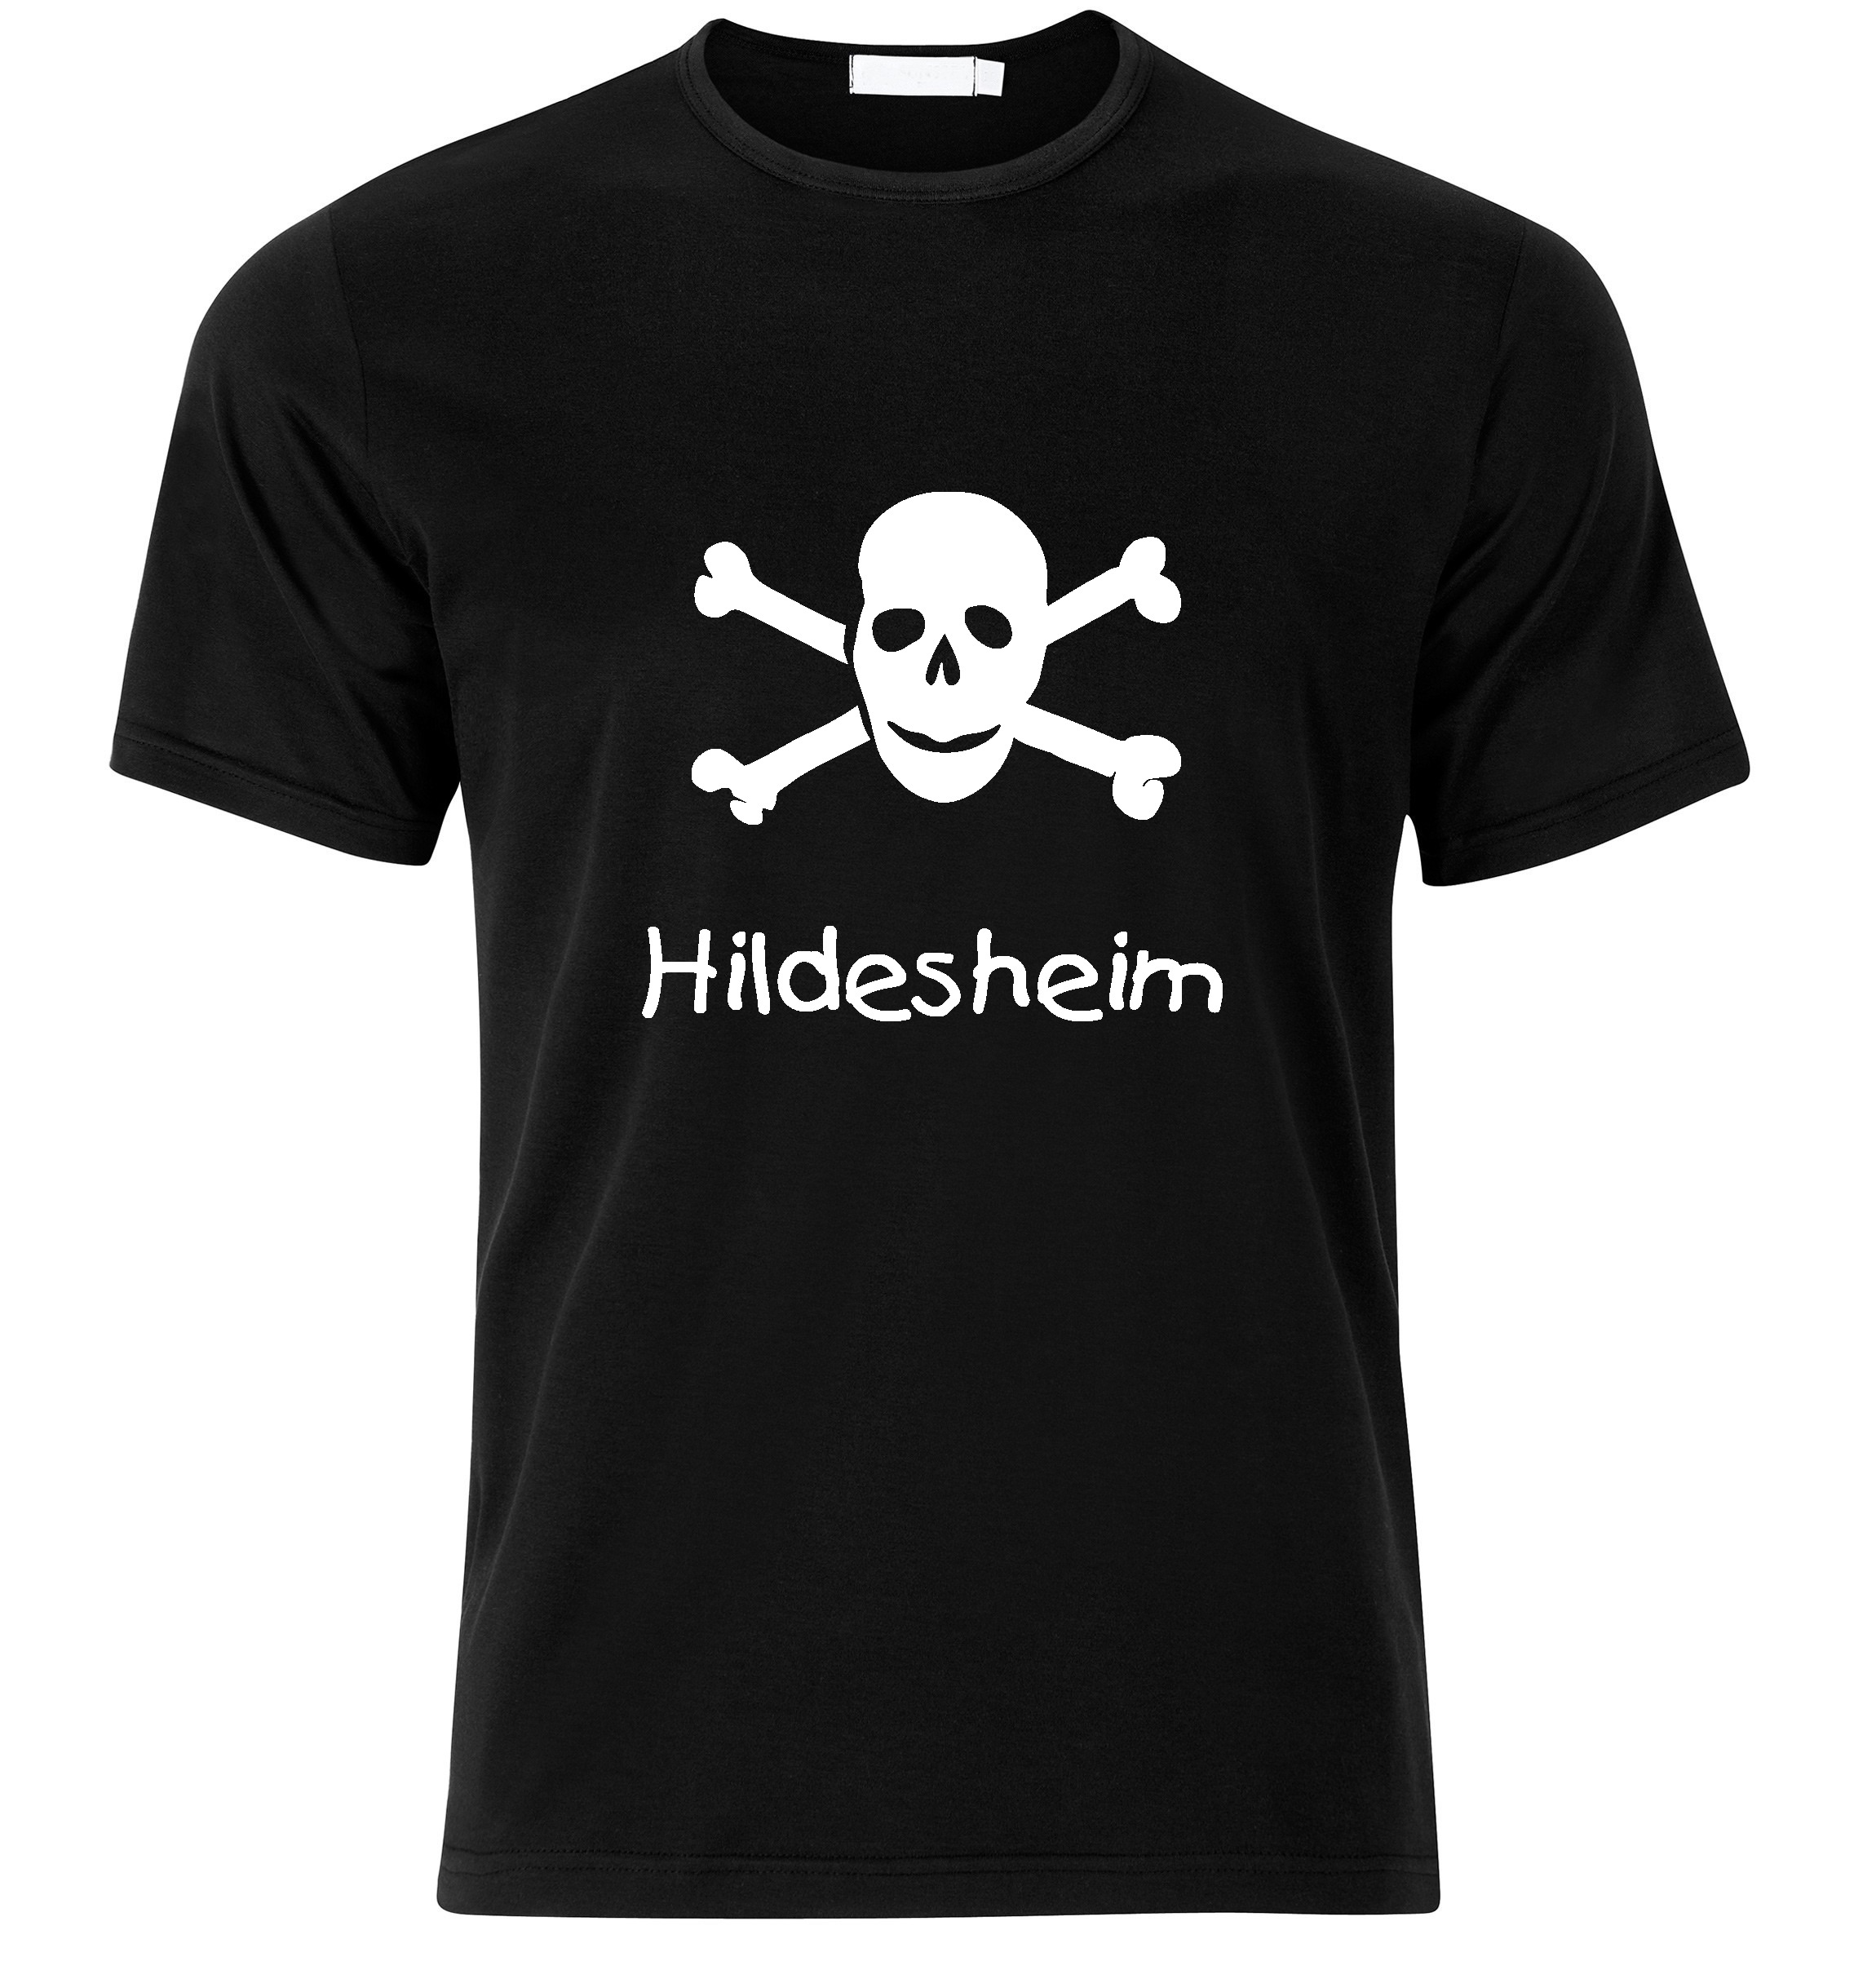 T-Shirt Hildesheim Jolly Roger, Totenkopf